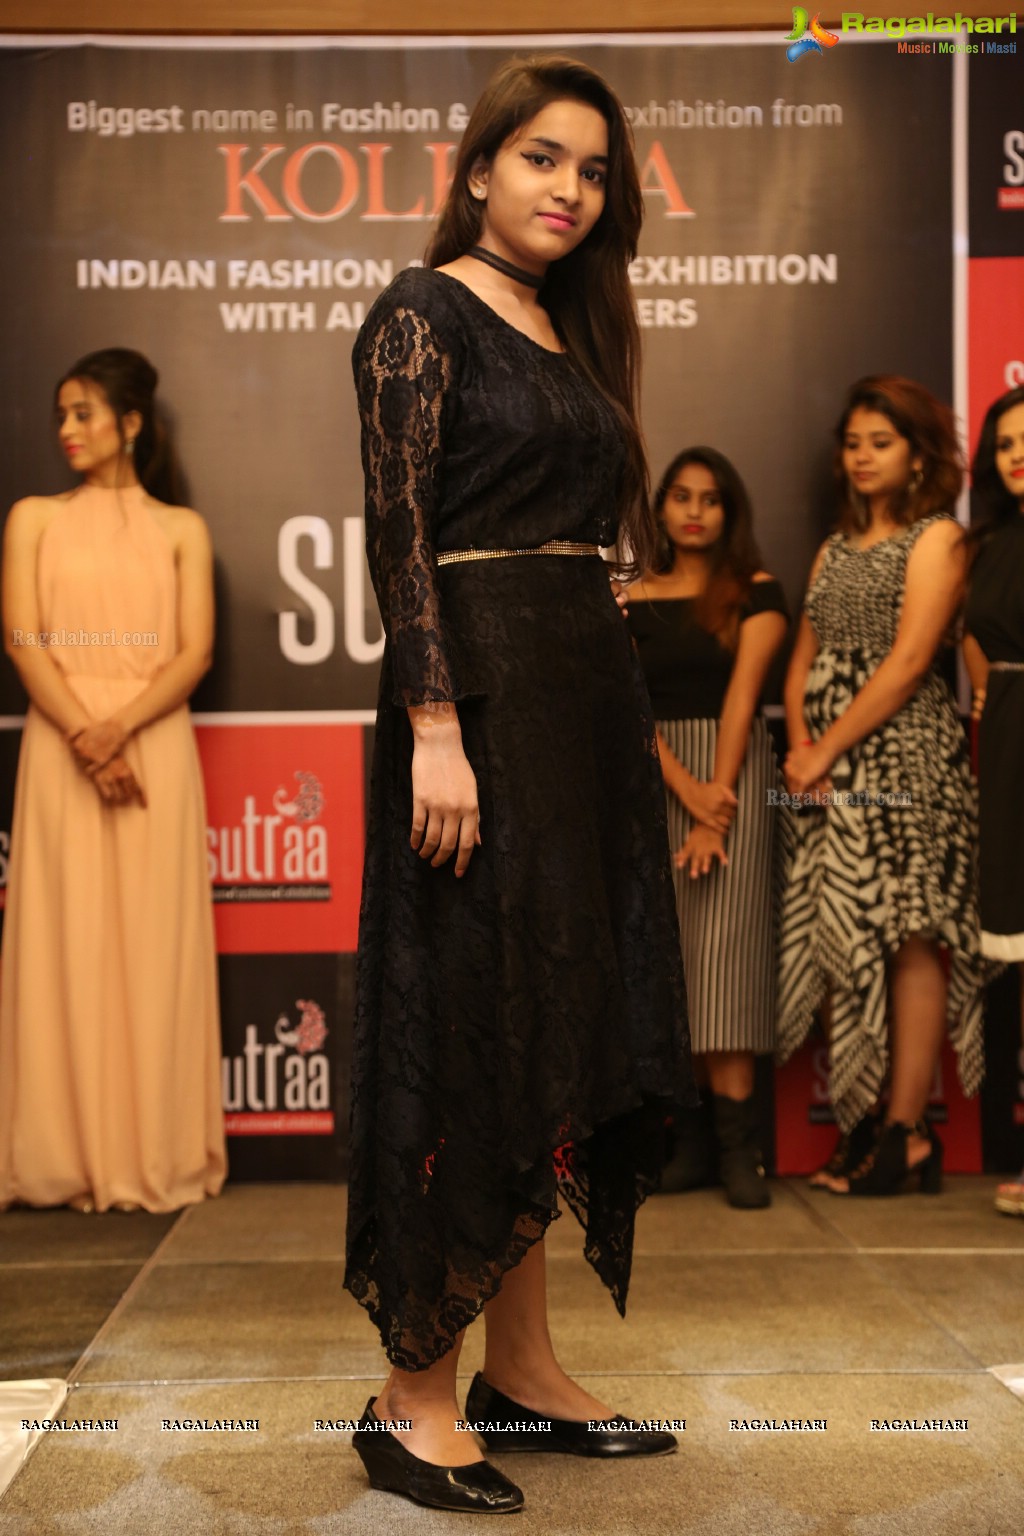 Sutraa Fashion Show at Marigold